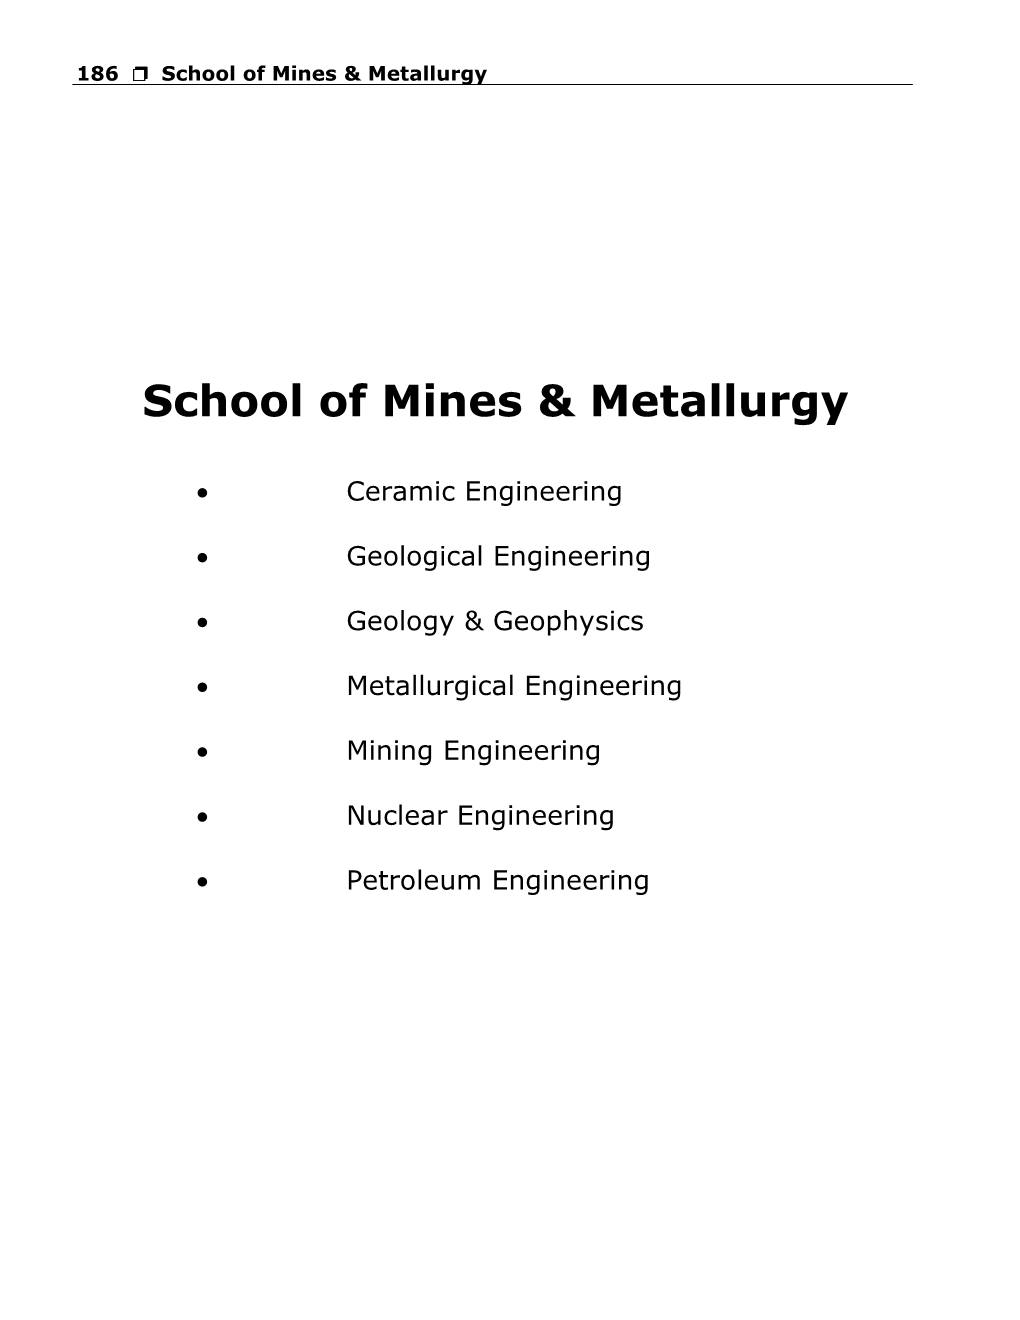 School of Mines & Metallurgy